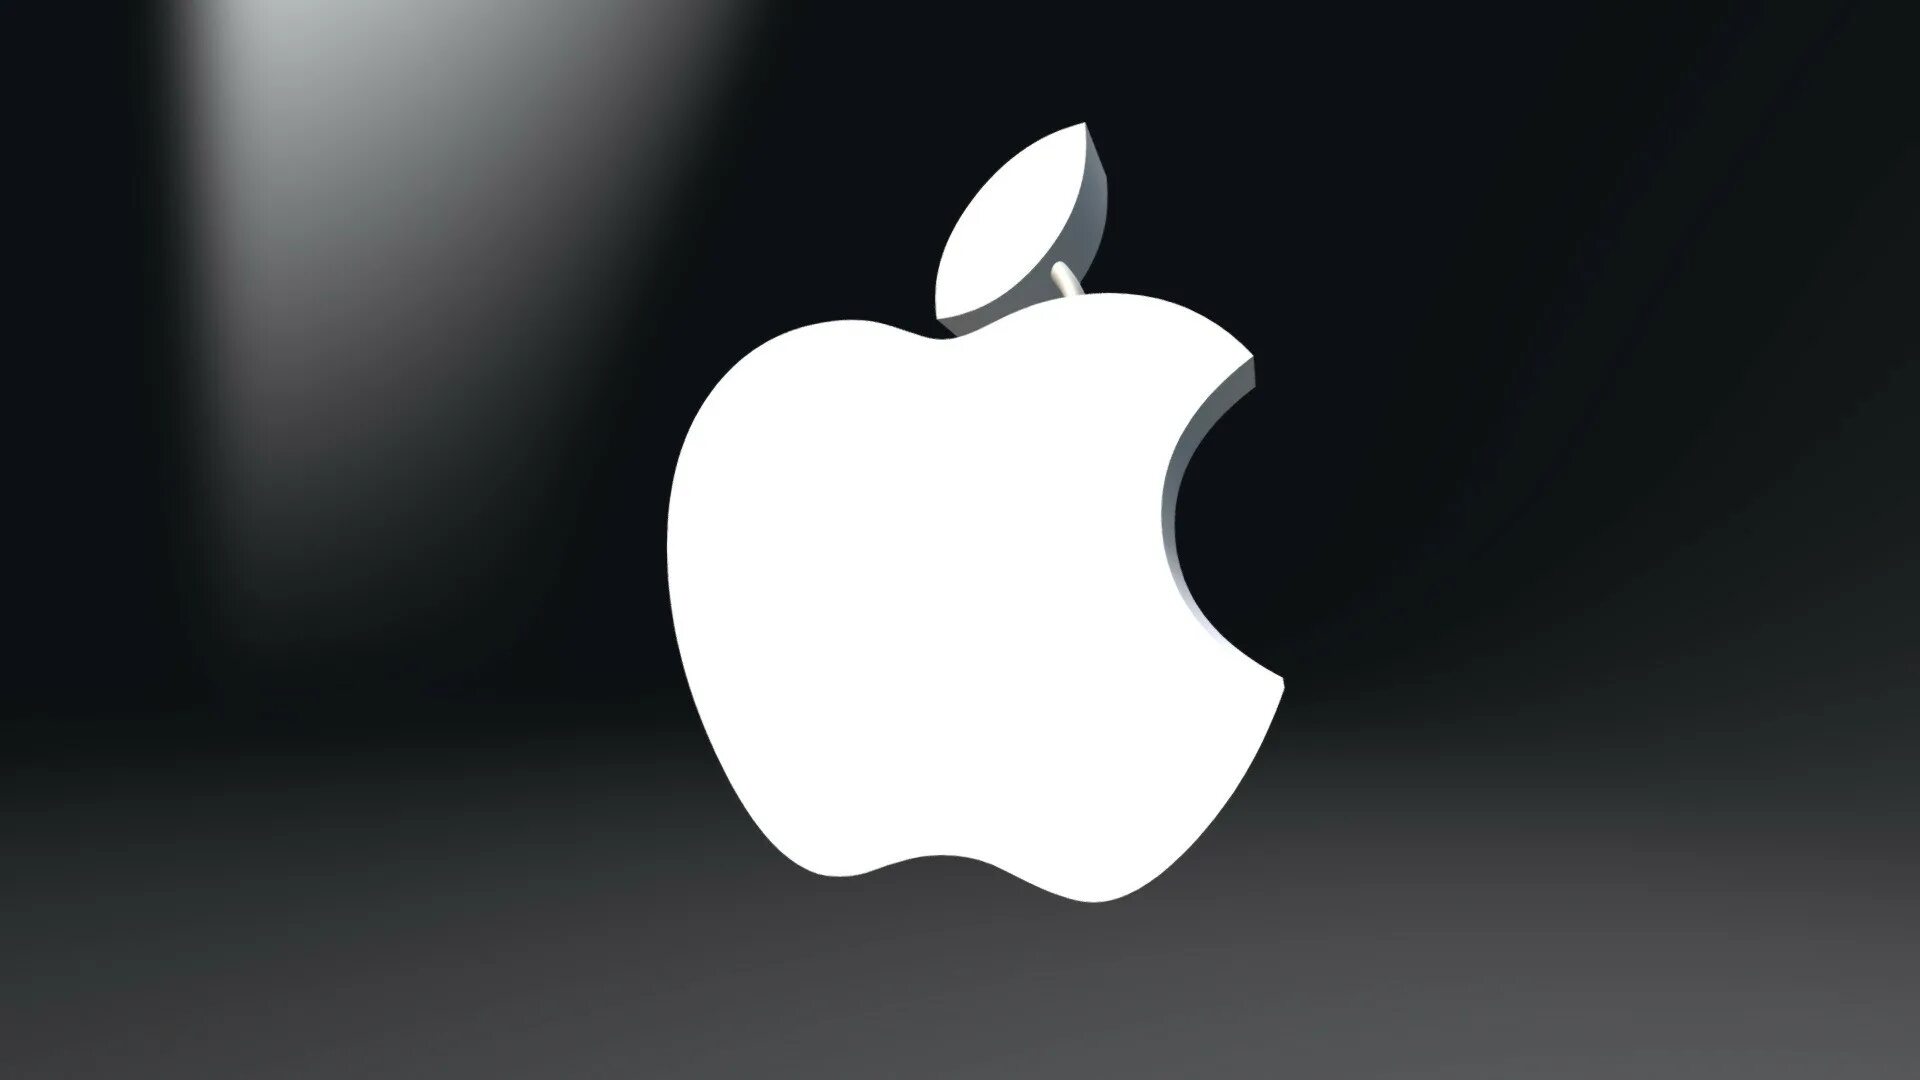 Apple inc iphone. Товарный знак Эппл яблоко. Айфон Аппле логотип. Эпл лого 2021. АПЛ айфон фирма.